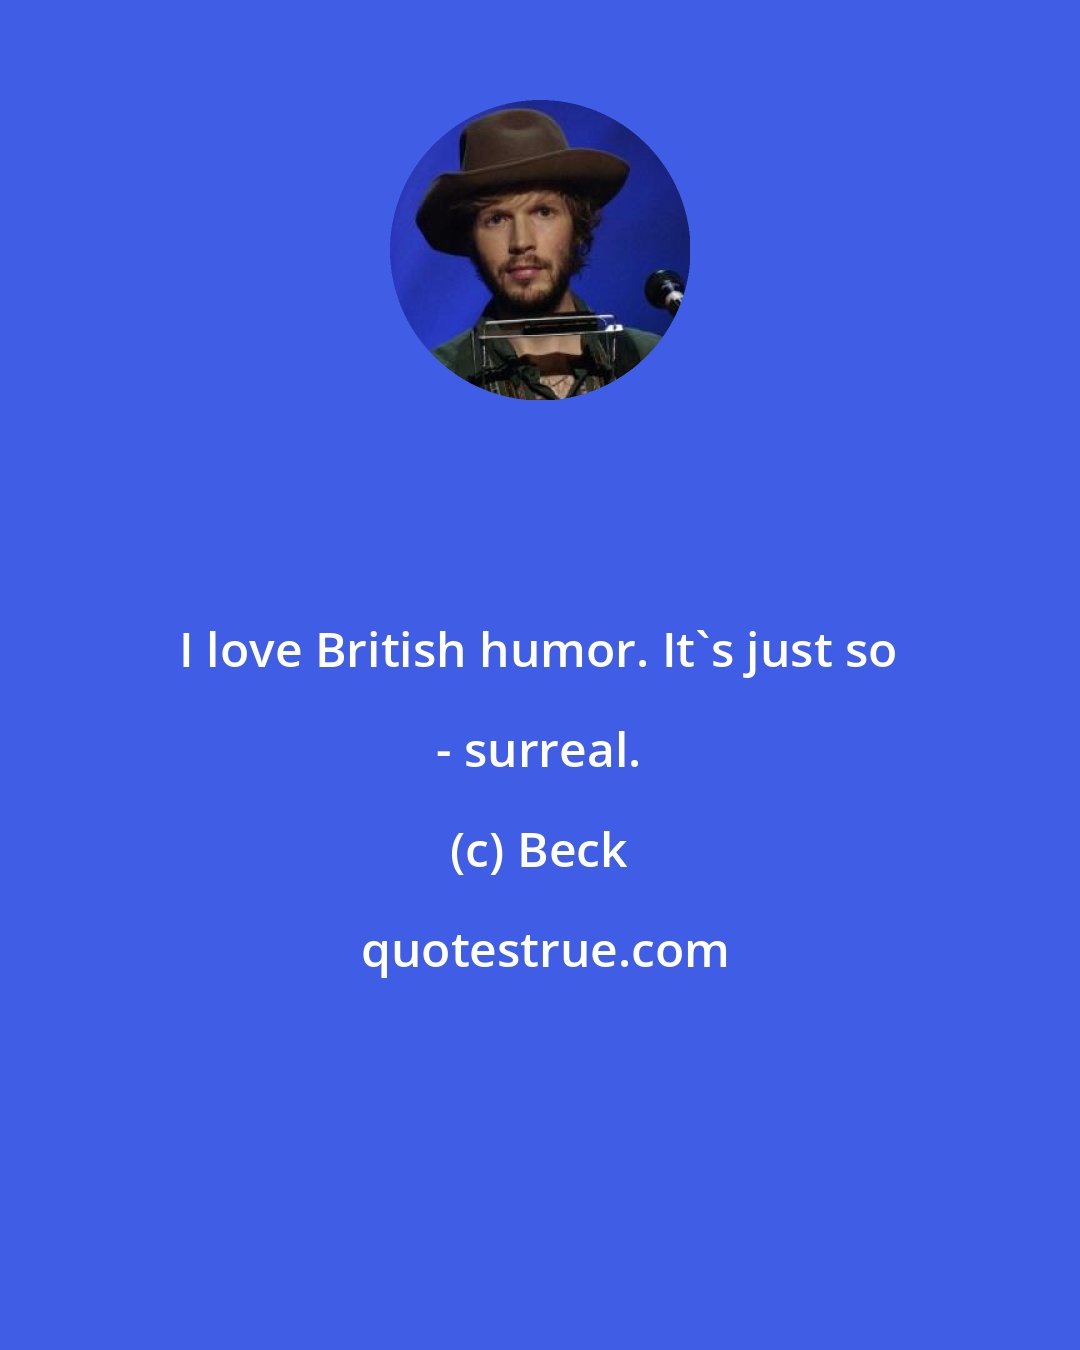 Beck: I love British humor. It's just so - surreal.